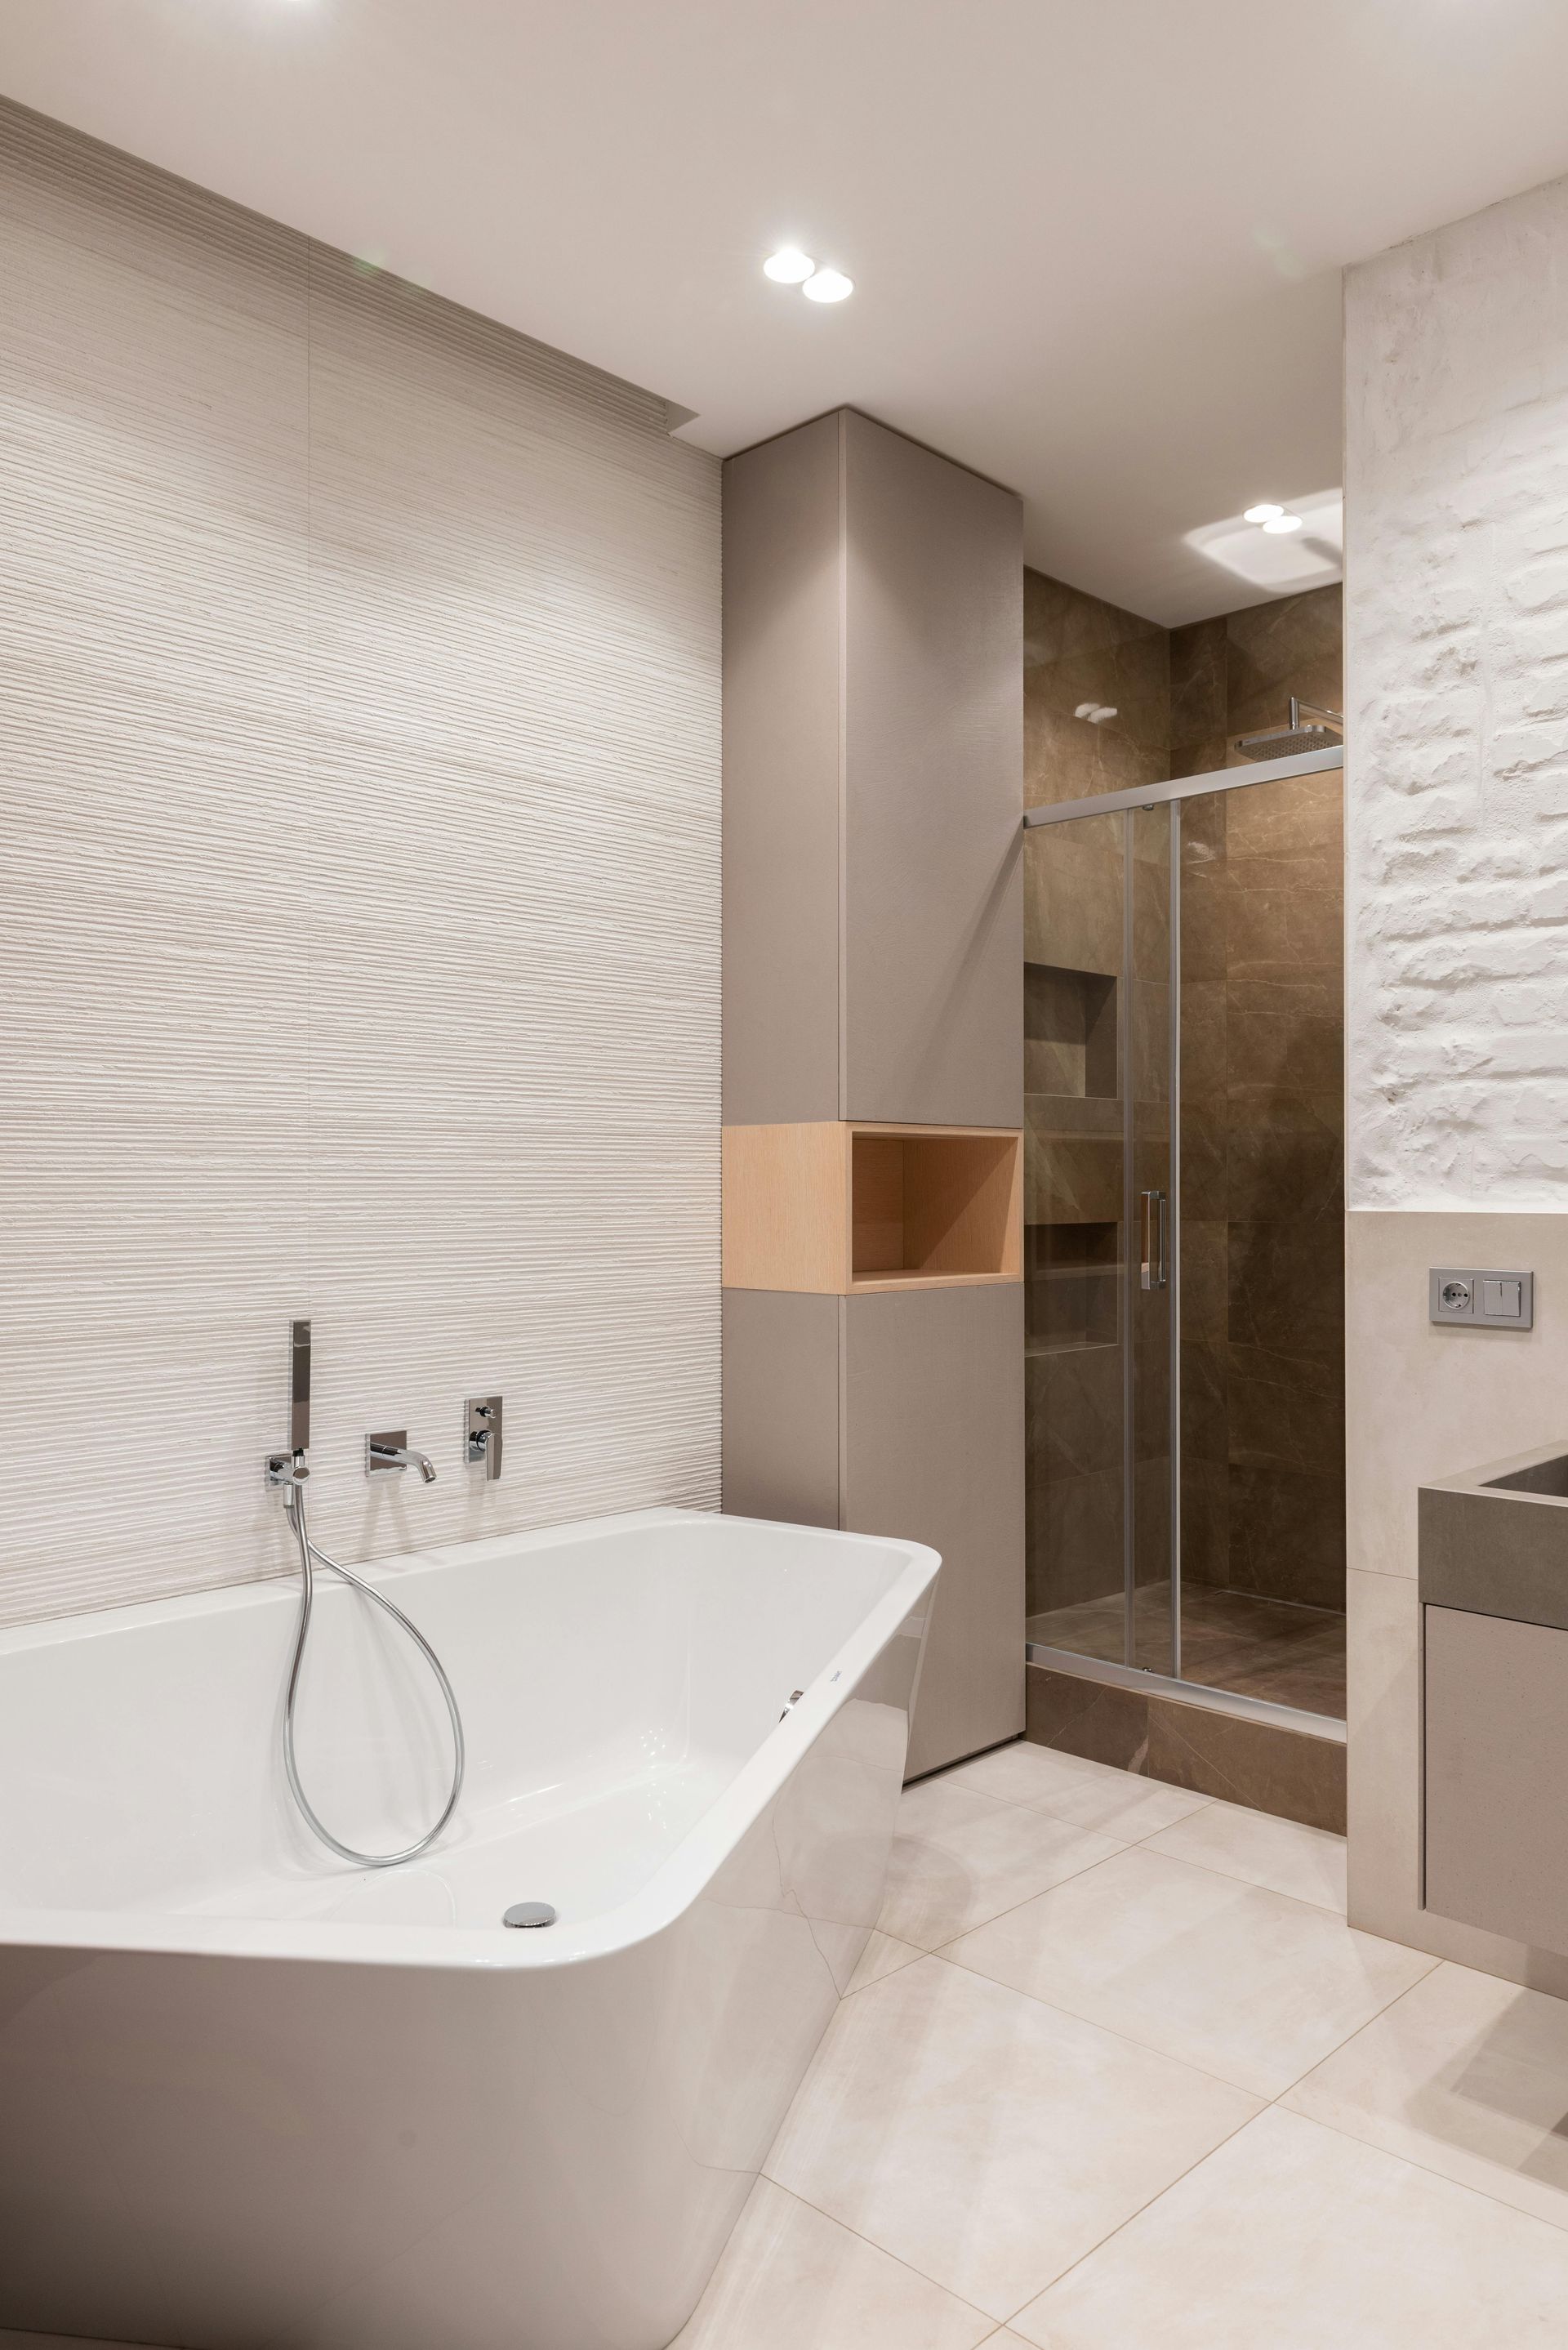 A lovely bathroom tiled in soft earthy tones